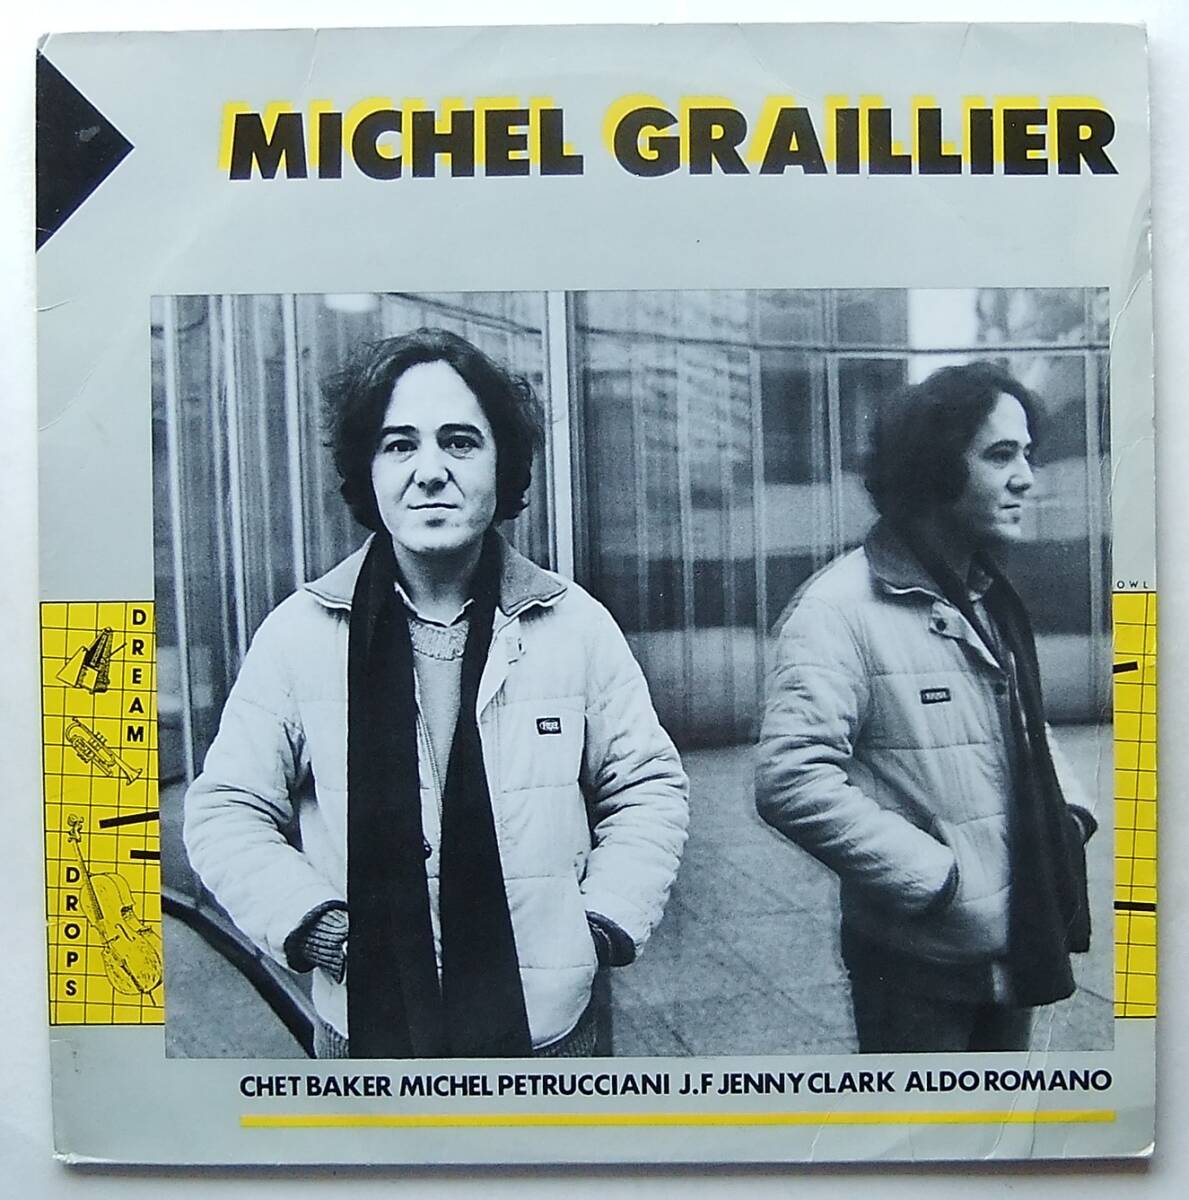 ◆ MICHEL GRAILLIER - CHET BAKER - MICHEL PETRUCCIANI / Dream Drops ◆ Owl 026 (France) ◆_画像1